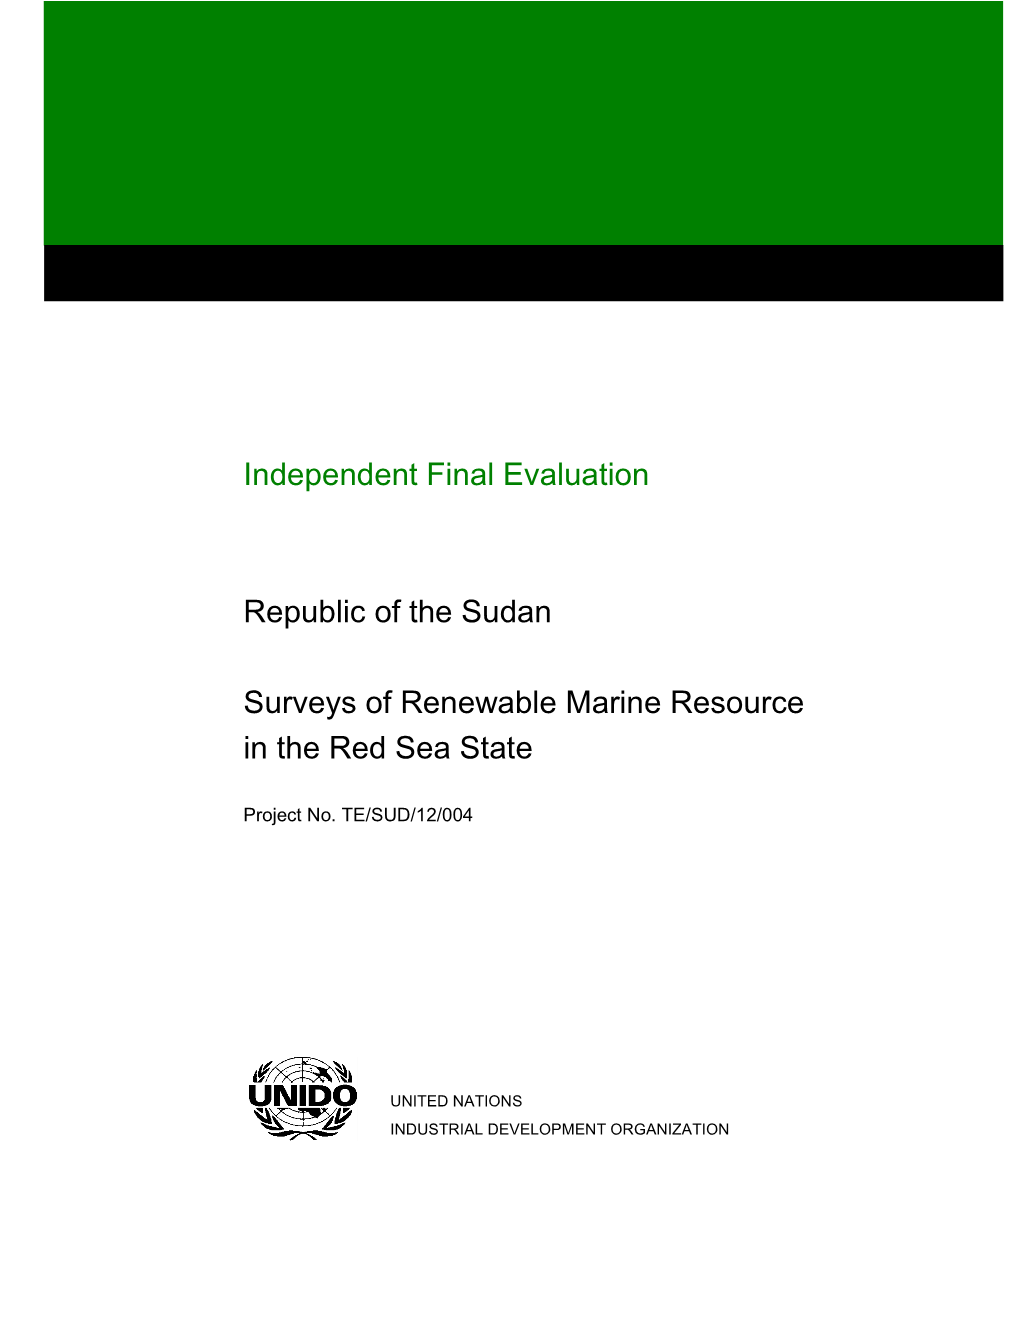 Republic of the Sudan Surveys of Renewable Marine Resource in The